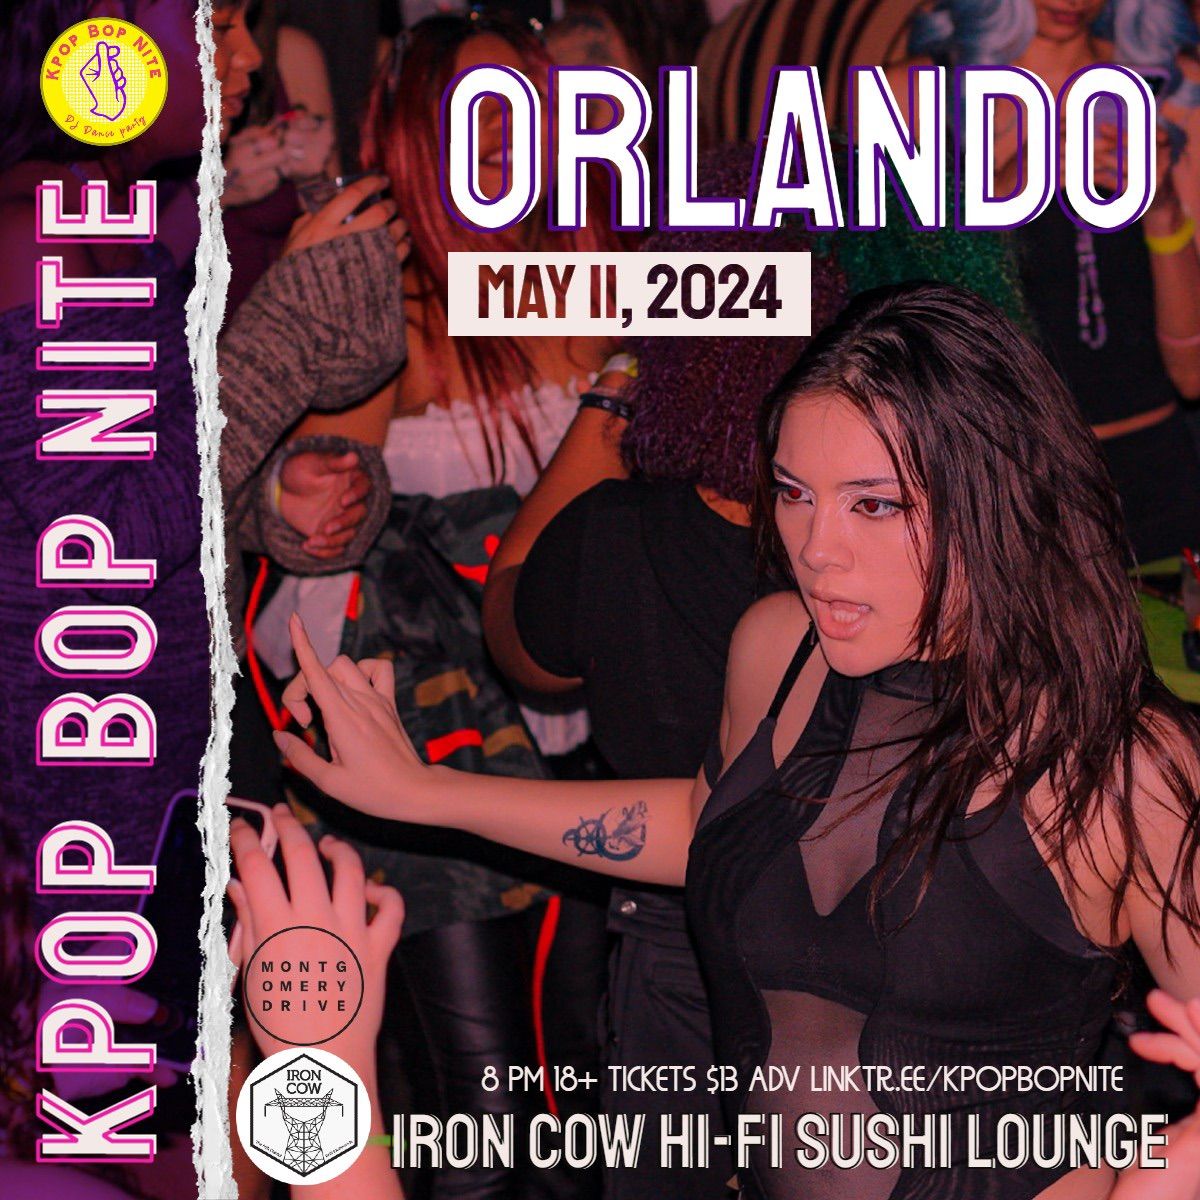 Kpop Bop Nite Orlando at Iron Cow Hi-Fi Sushi Lounge - Orlando, FL